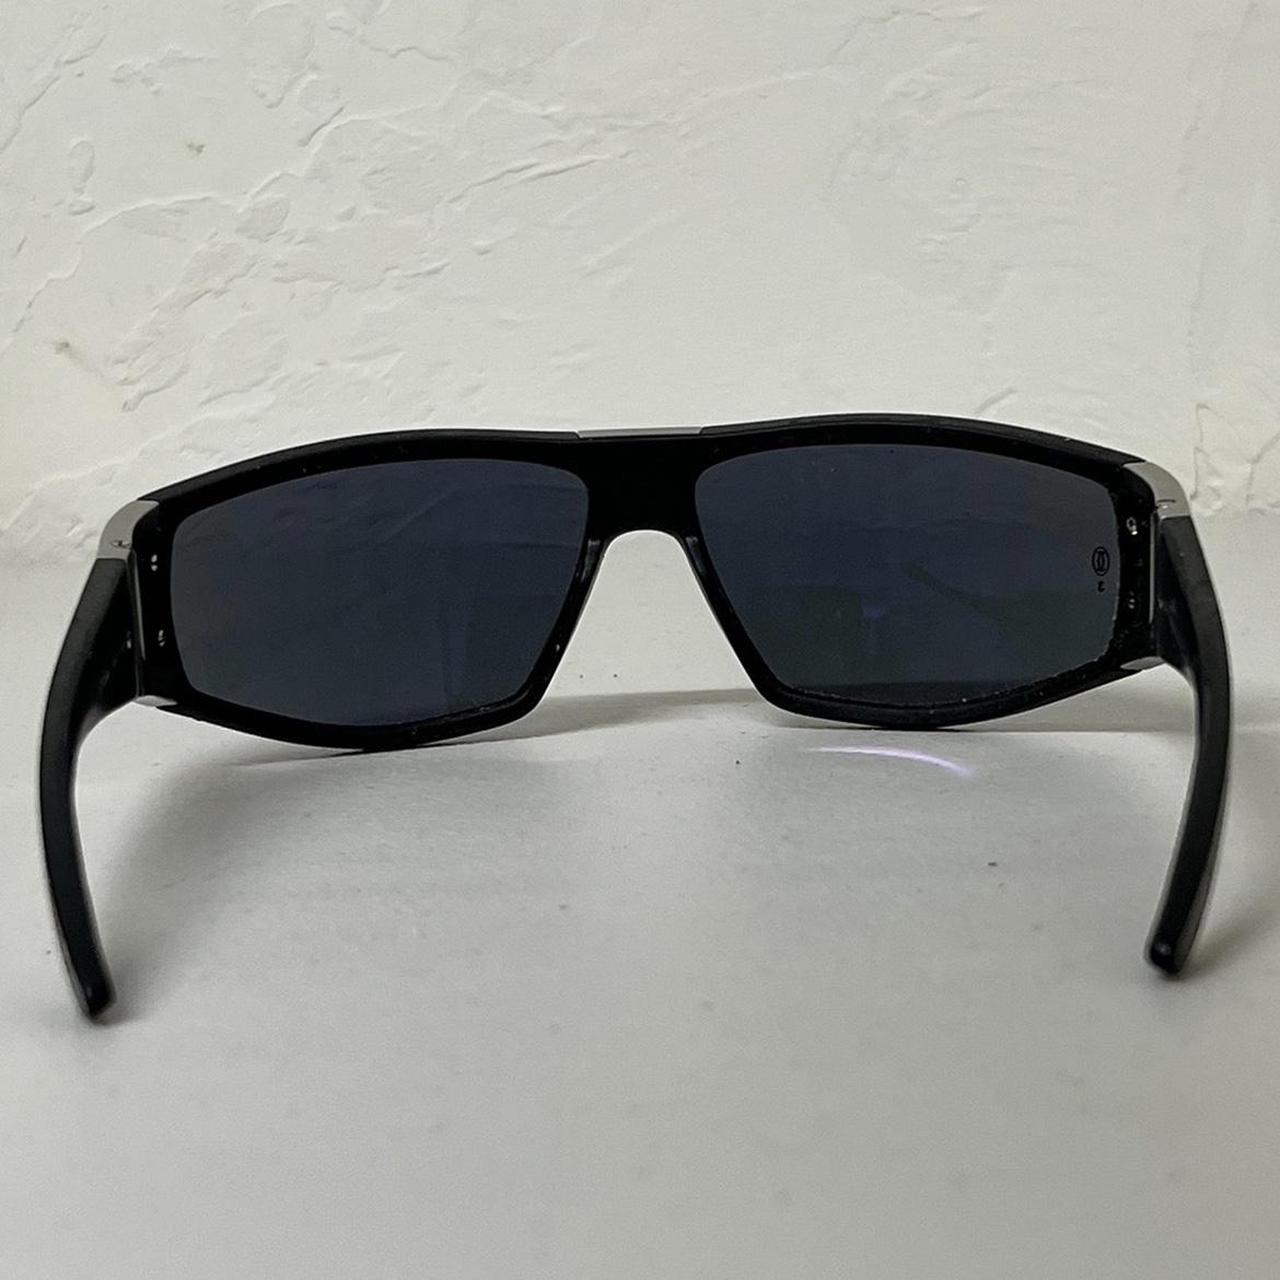 Cartier Men's Black and Silver Sunglasses | Depop